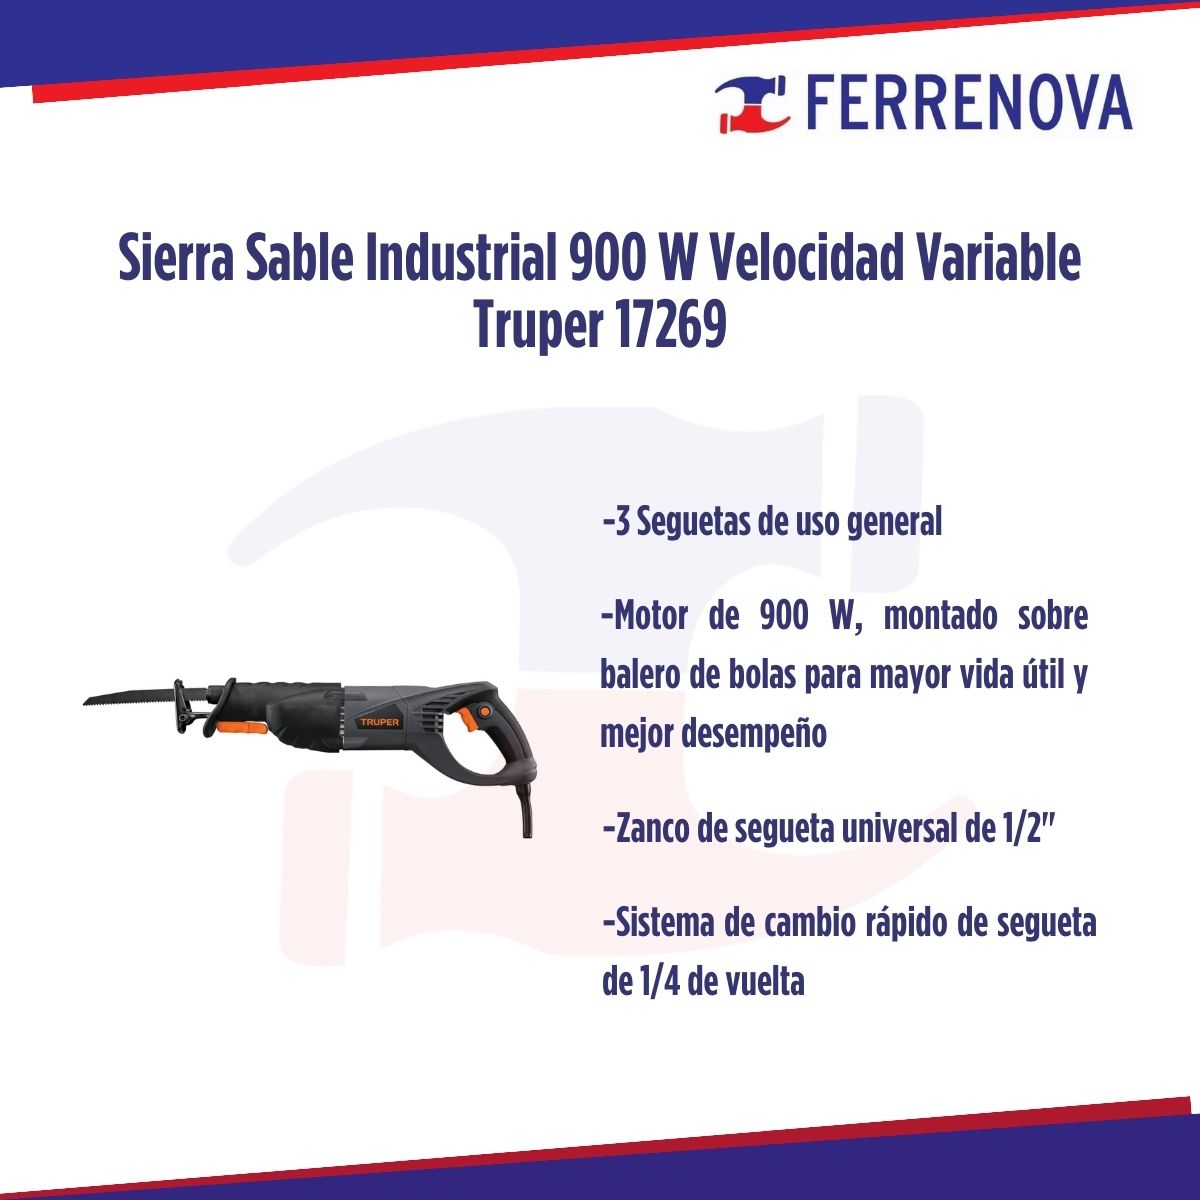 Sierra Sable Industrial 900 W Velocidad Variable Truper 17269